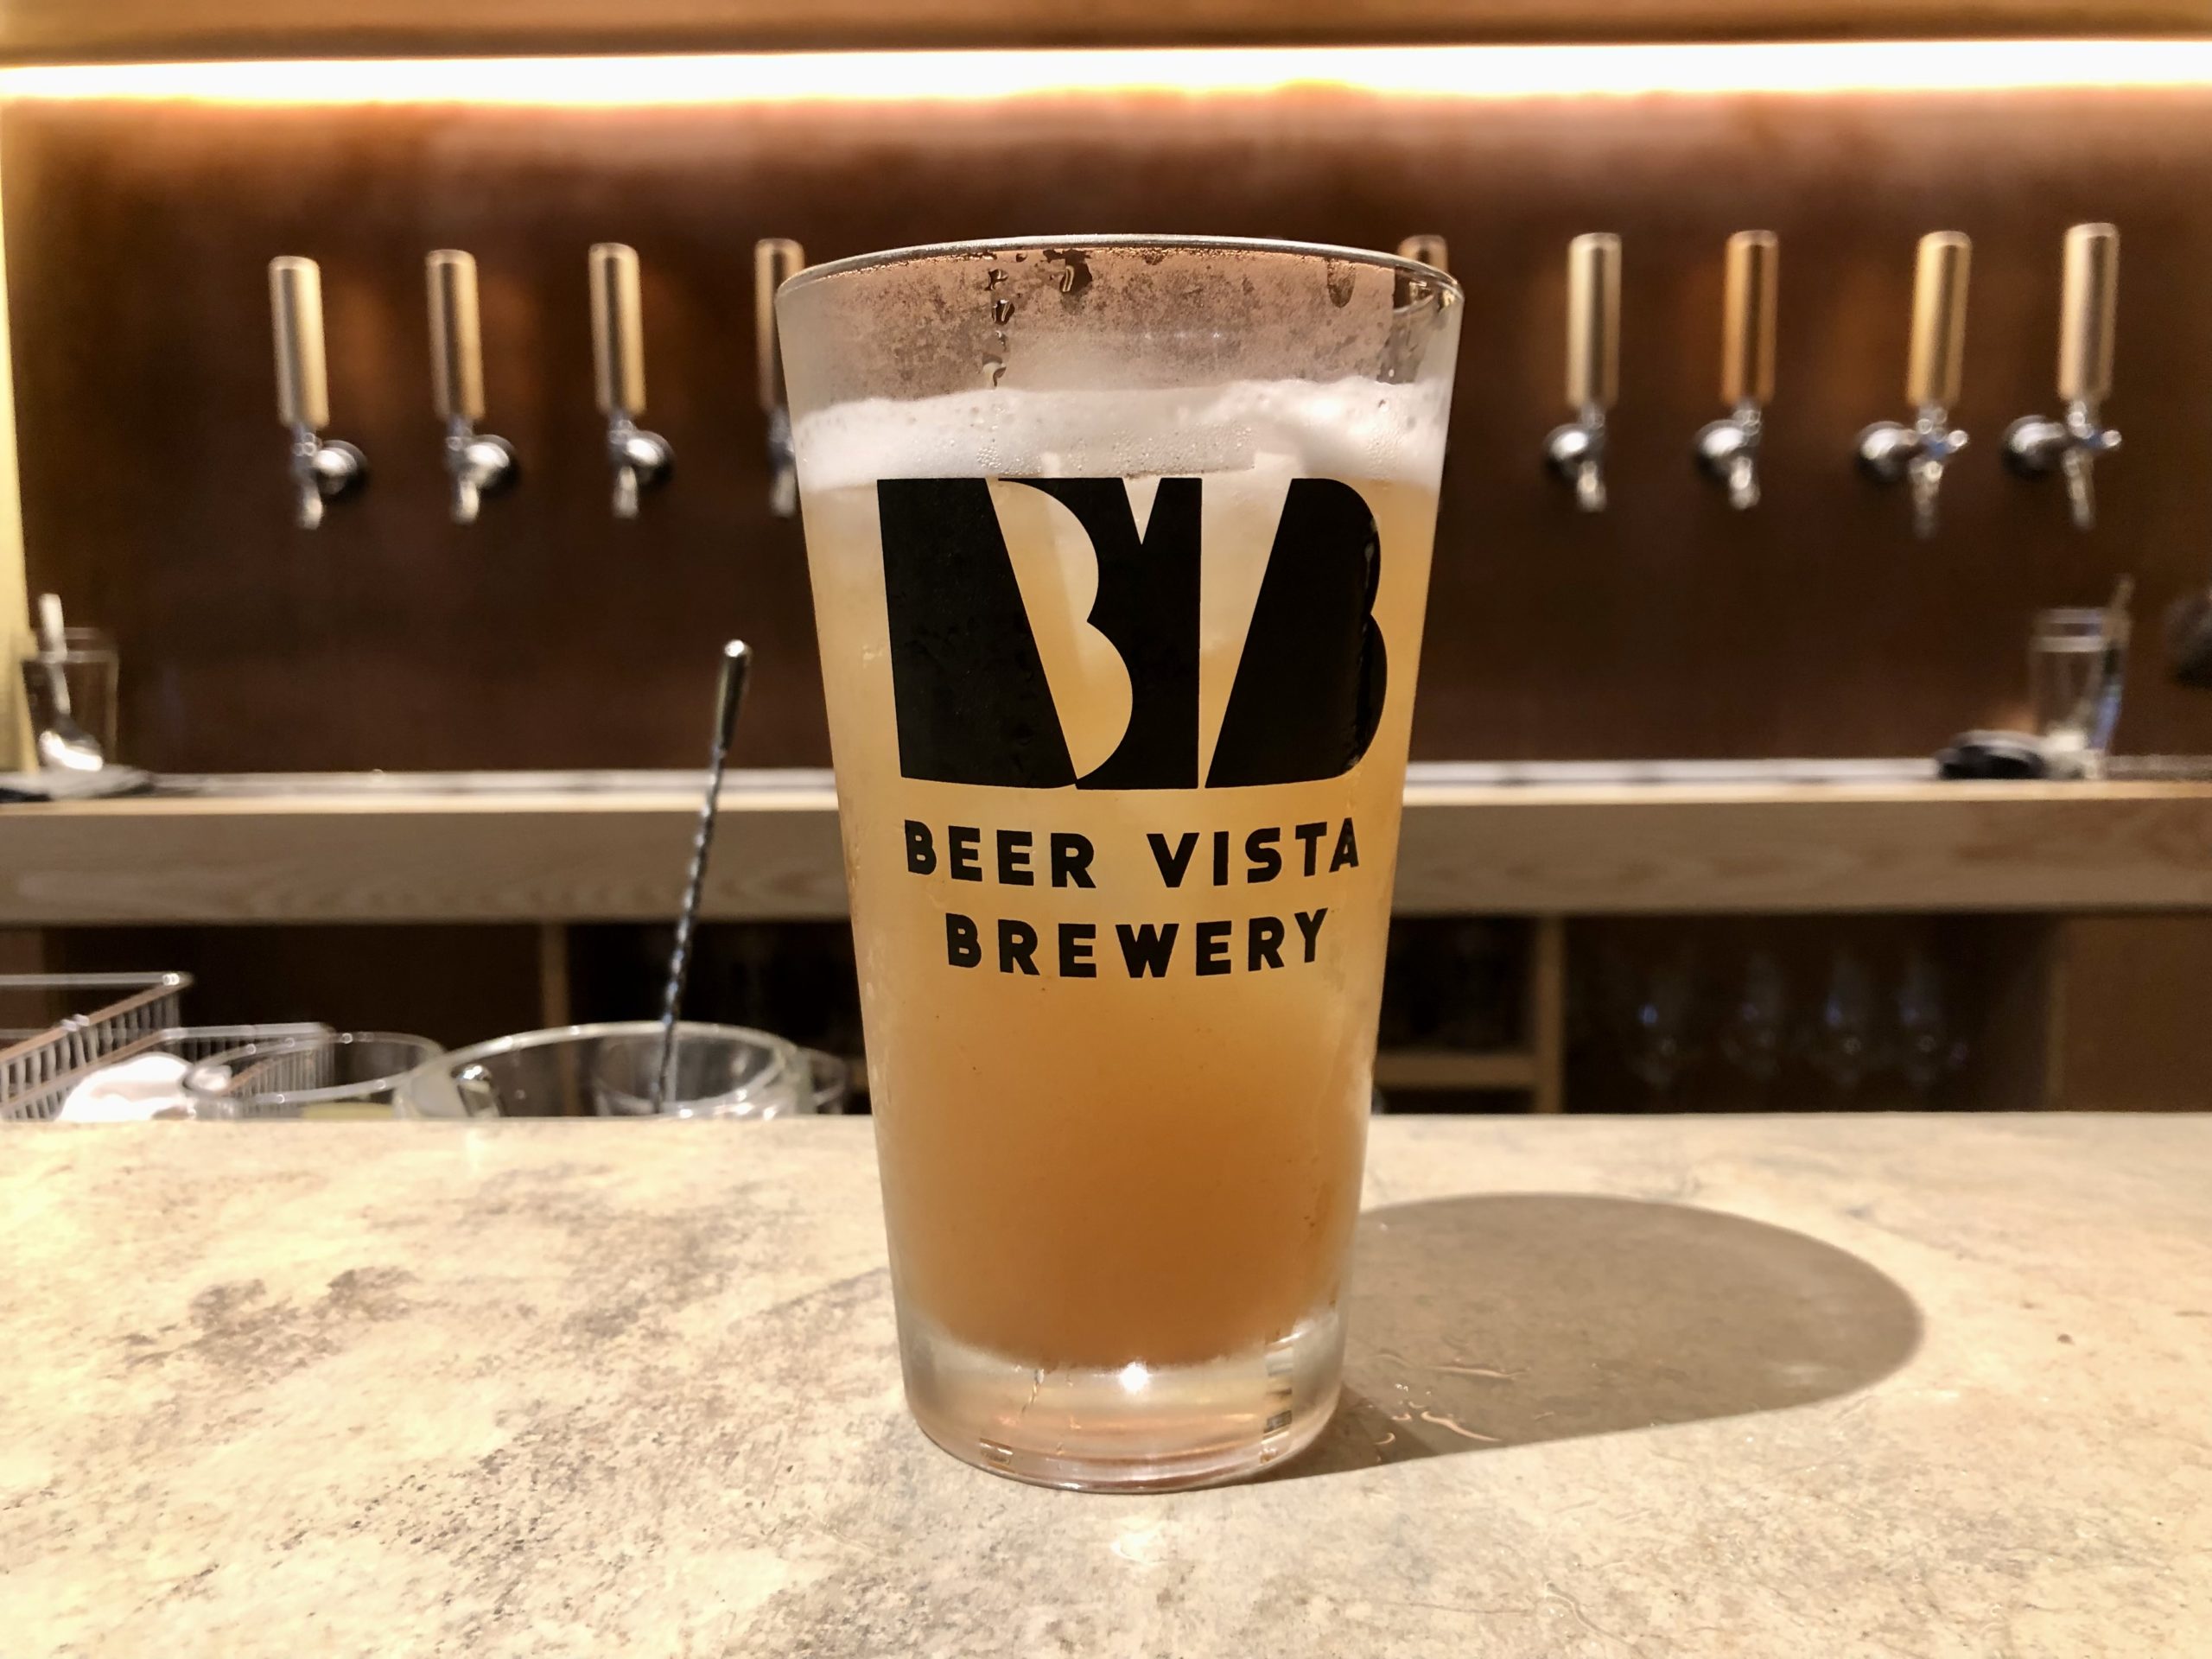 beer vista brewery>